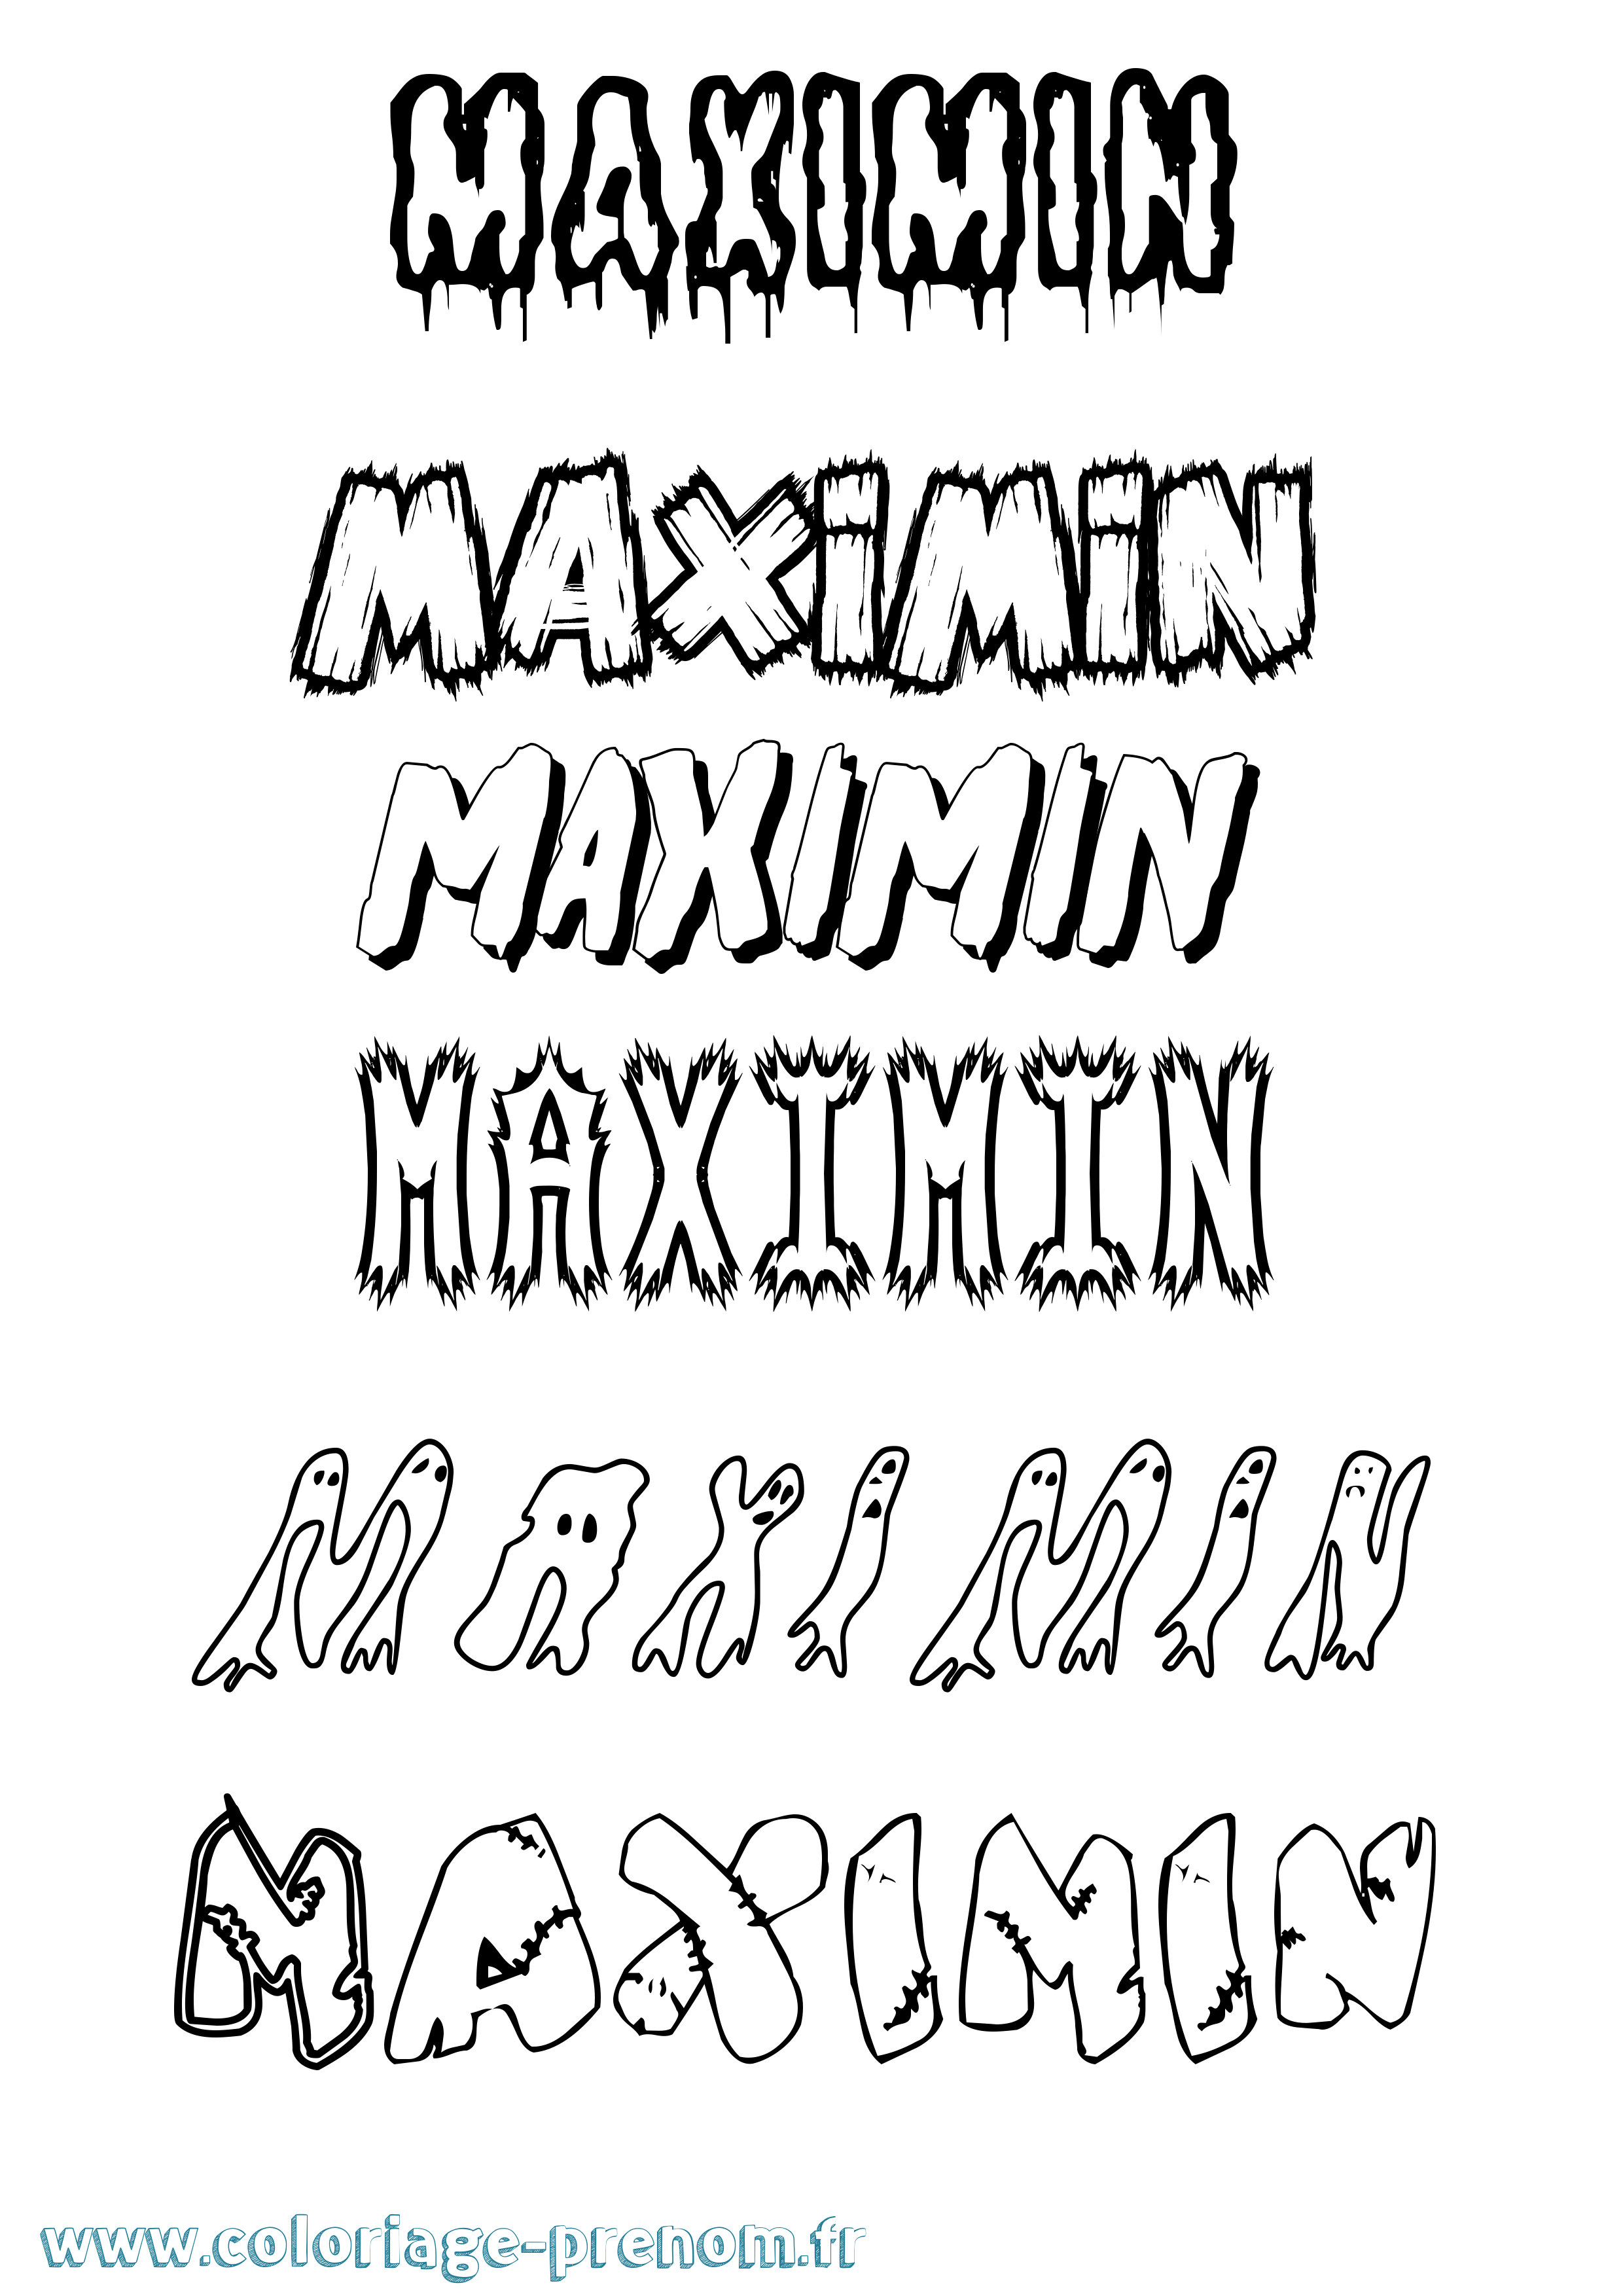 Coloriage prénom Maximin Frisson